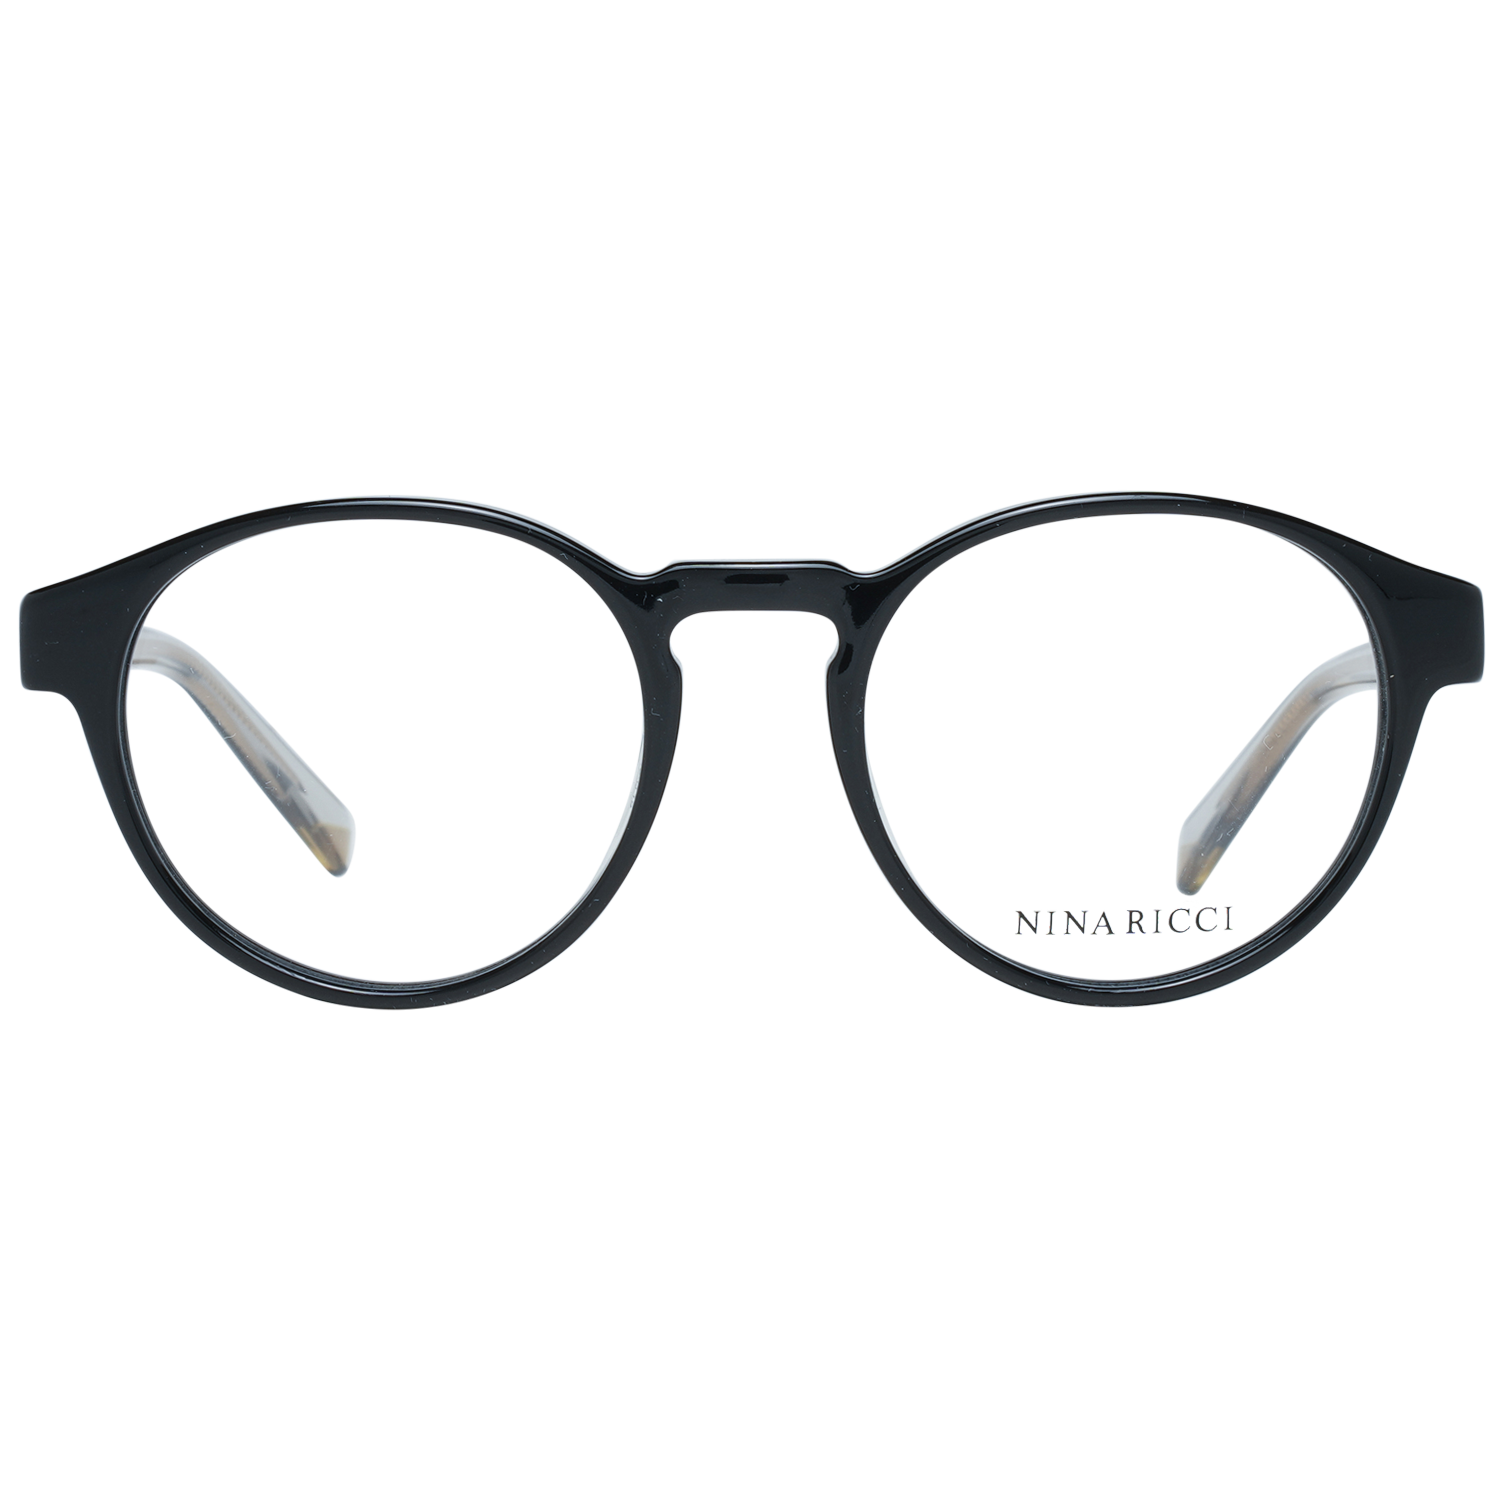 Nina Ricci Frames Nina Ricci Glasses Frames VNR021 0700 49 Eyeglasses Eyewear UK USA Australia 